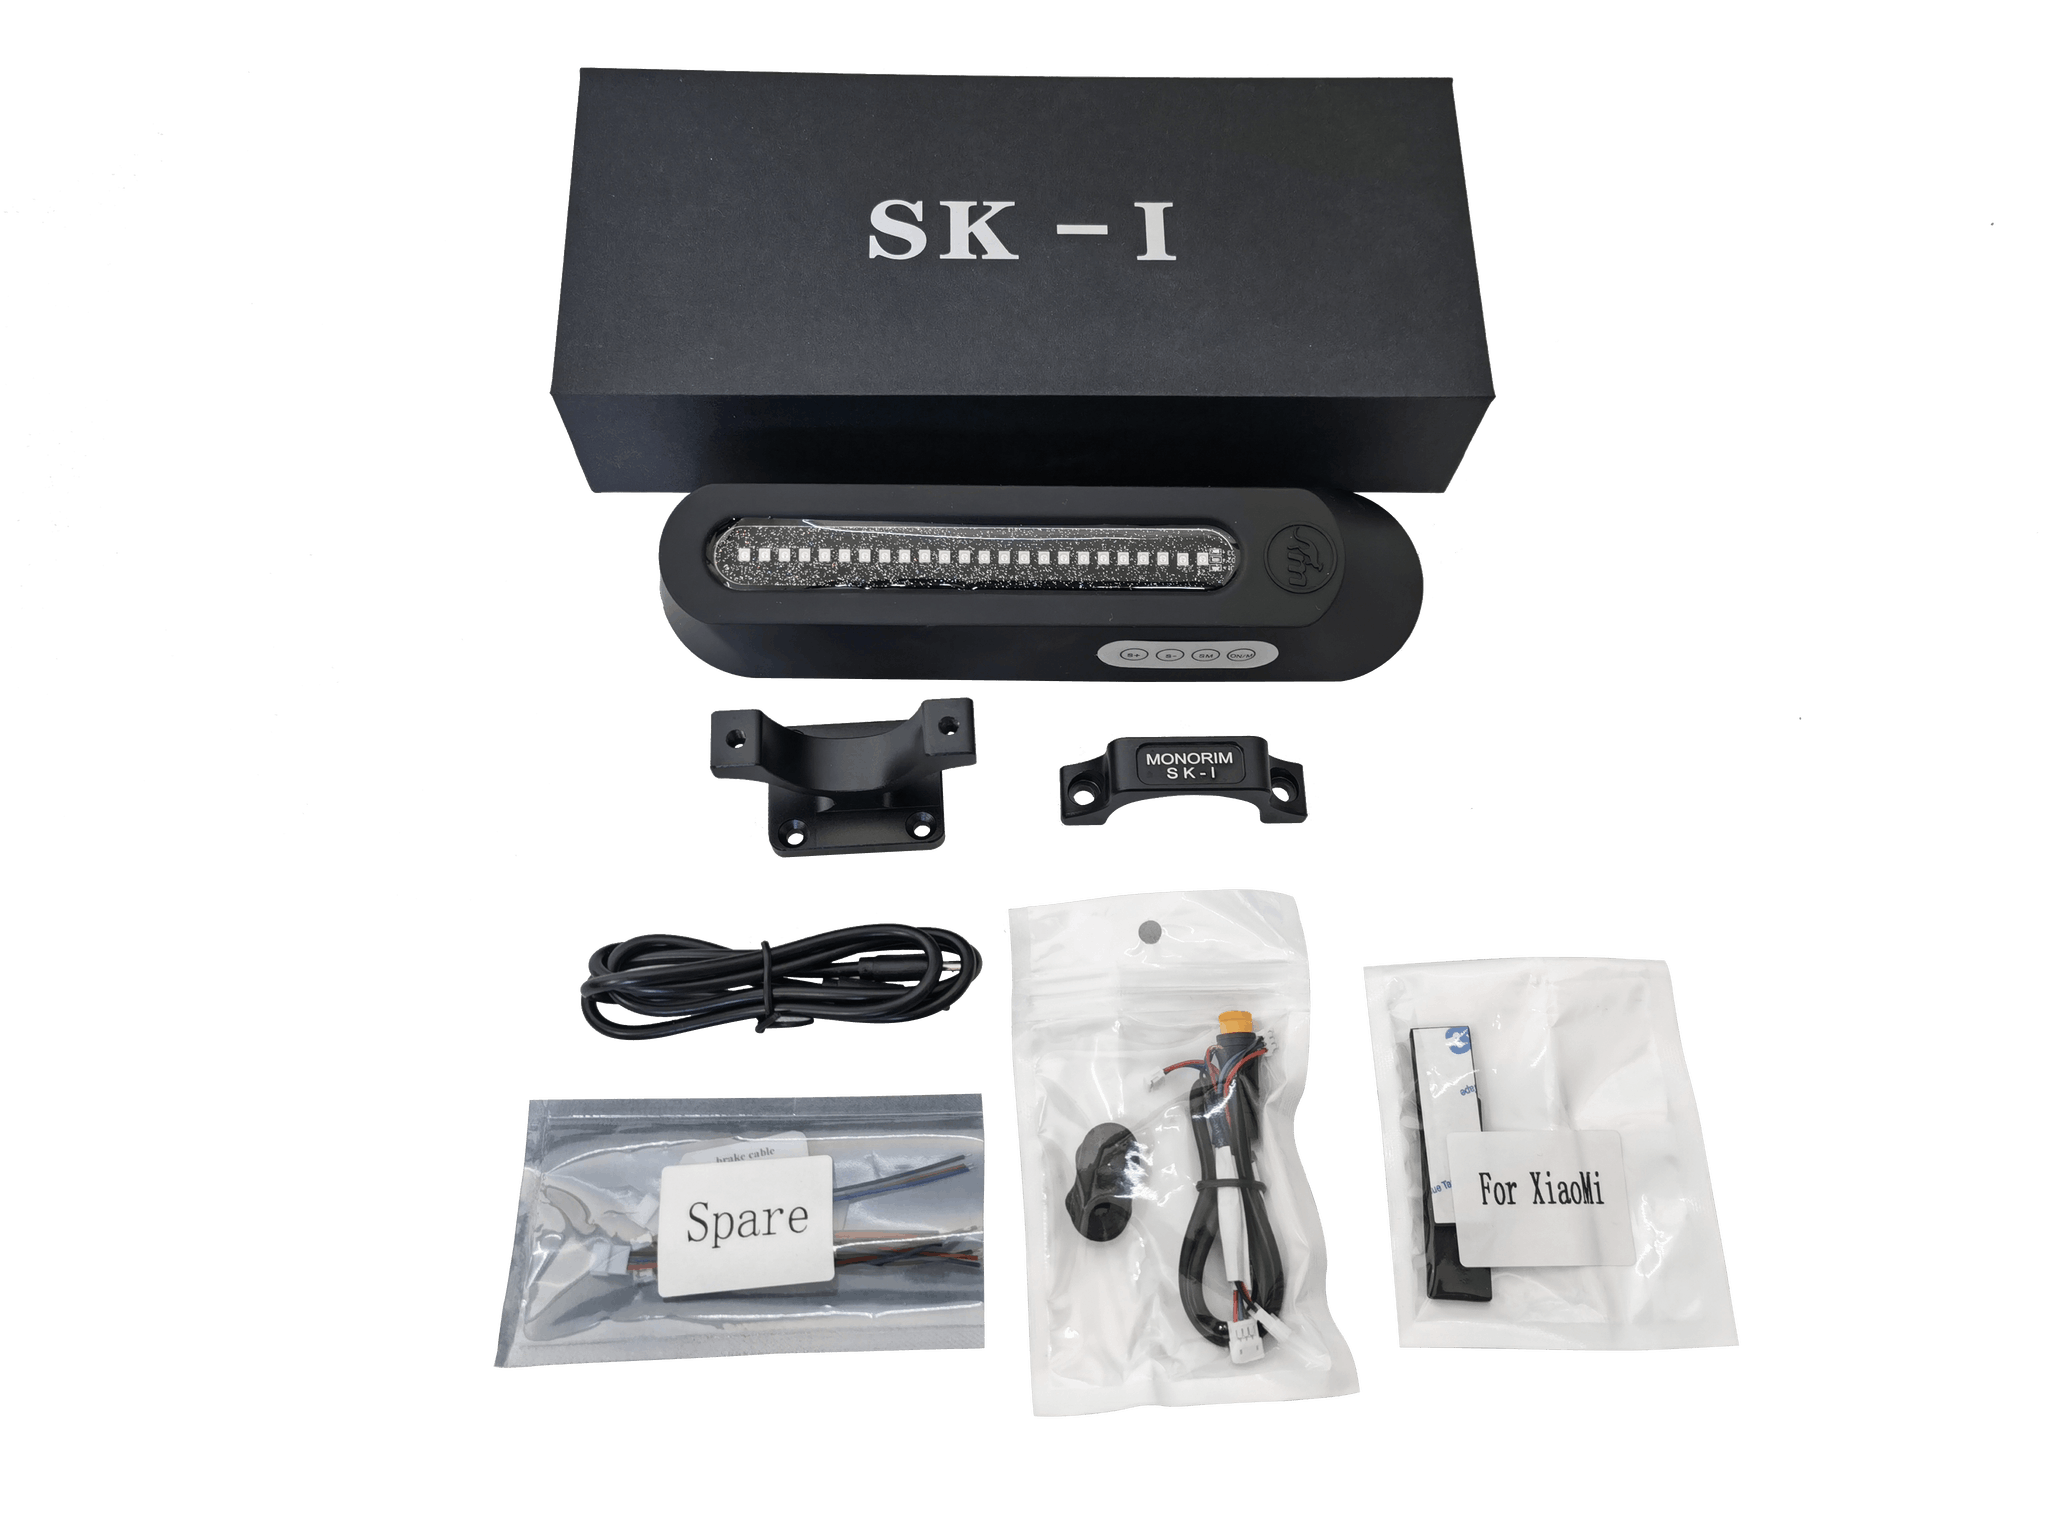 Monorim SK-1 throttle and brake speakers